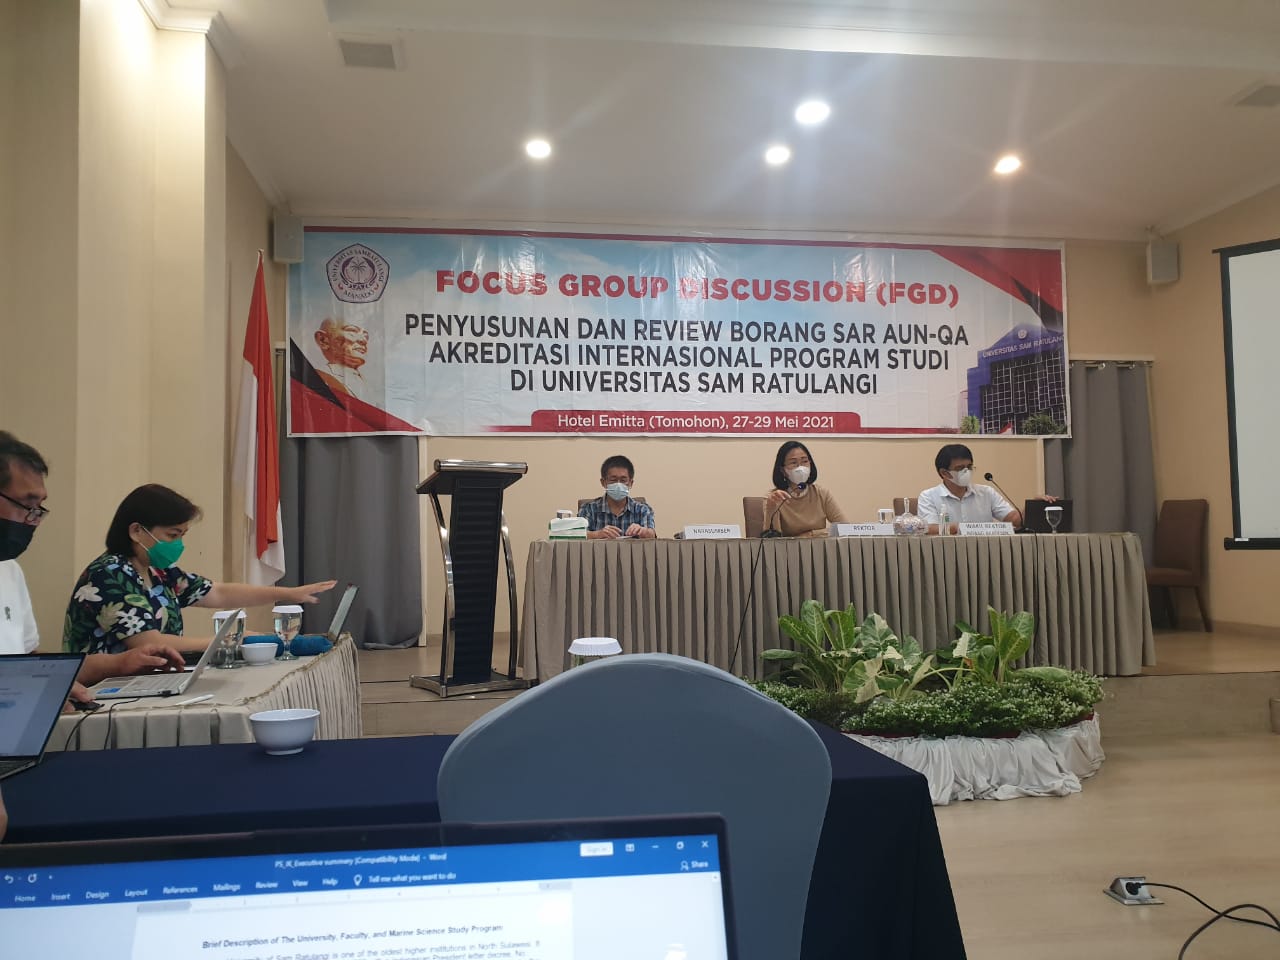 FGD Penyusunan dan Review Borang SAR AUN-QA